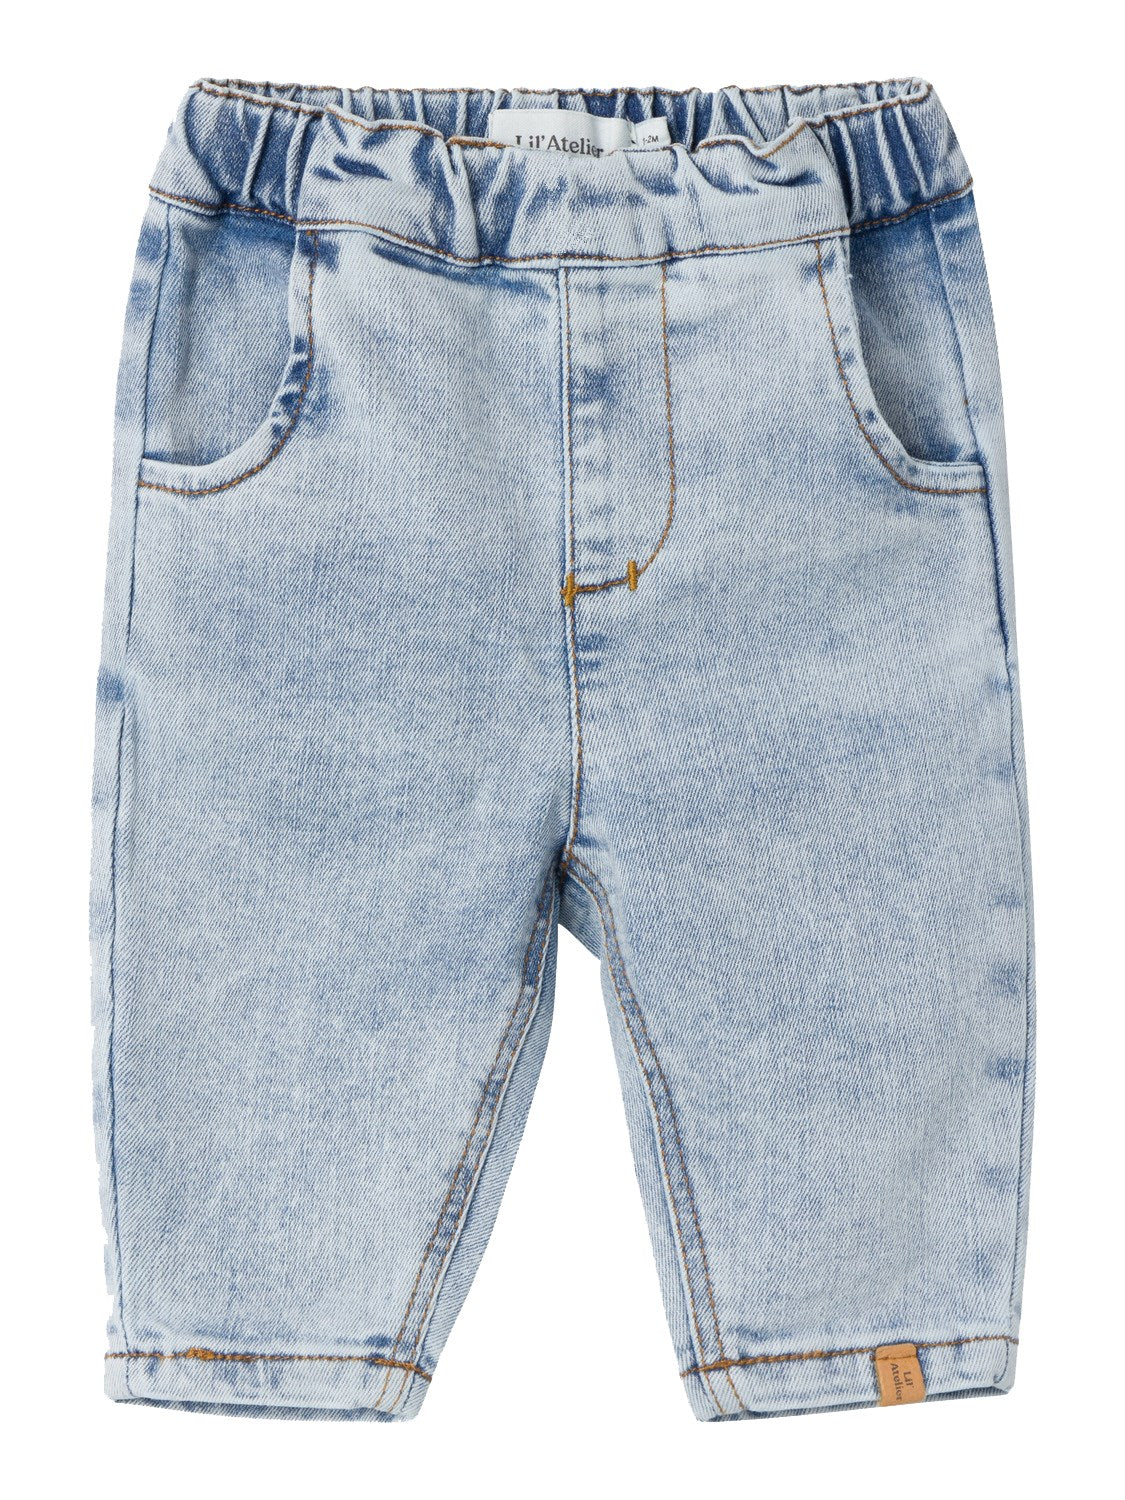 Se Lil Atelier Ben Tapered Jeans - Light Blue Denim - 56 cm hos Luxbaby.dk